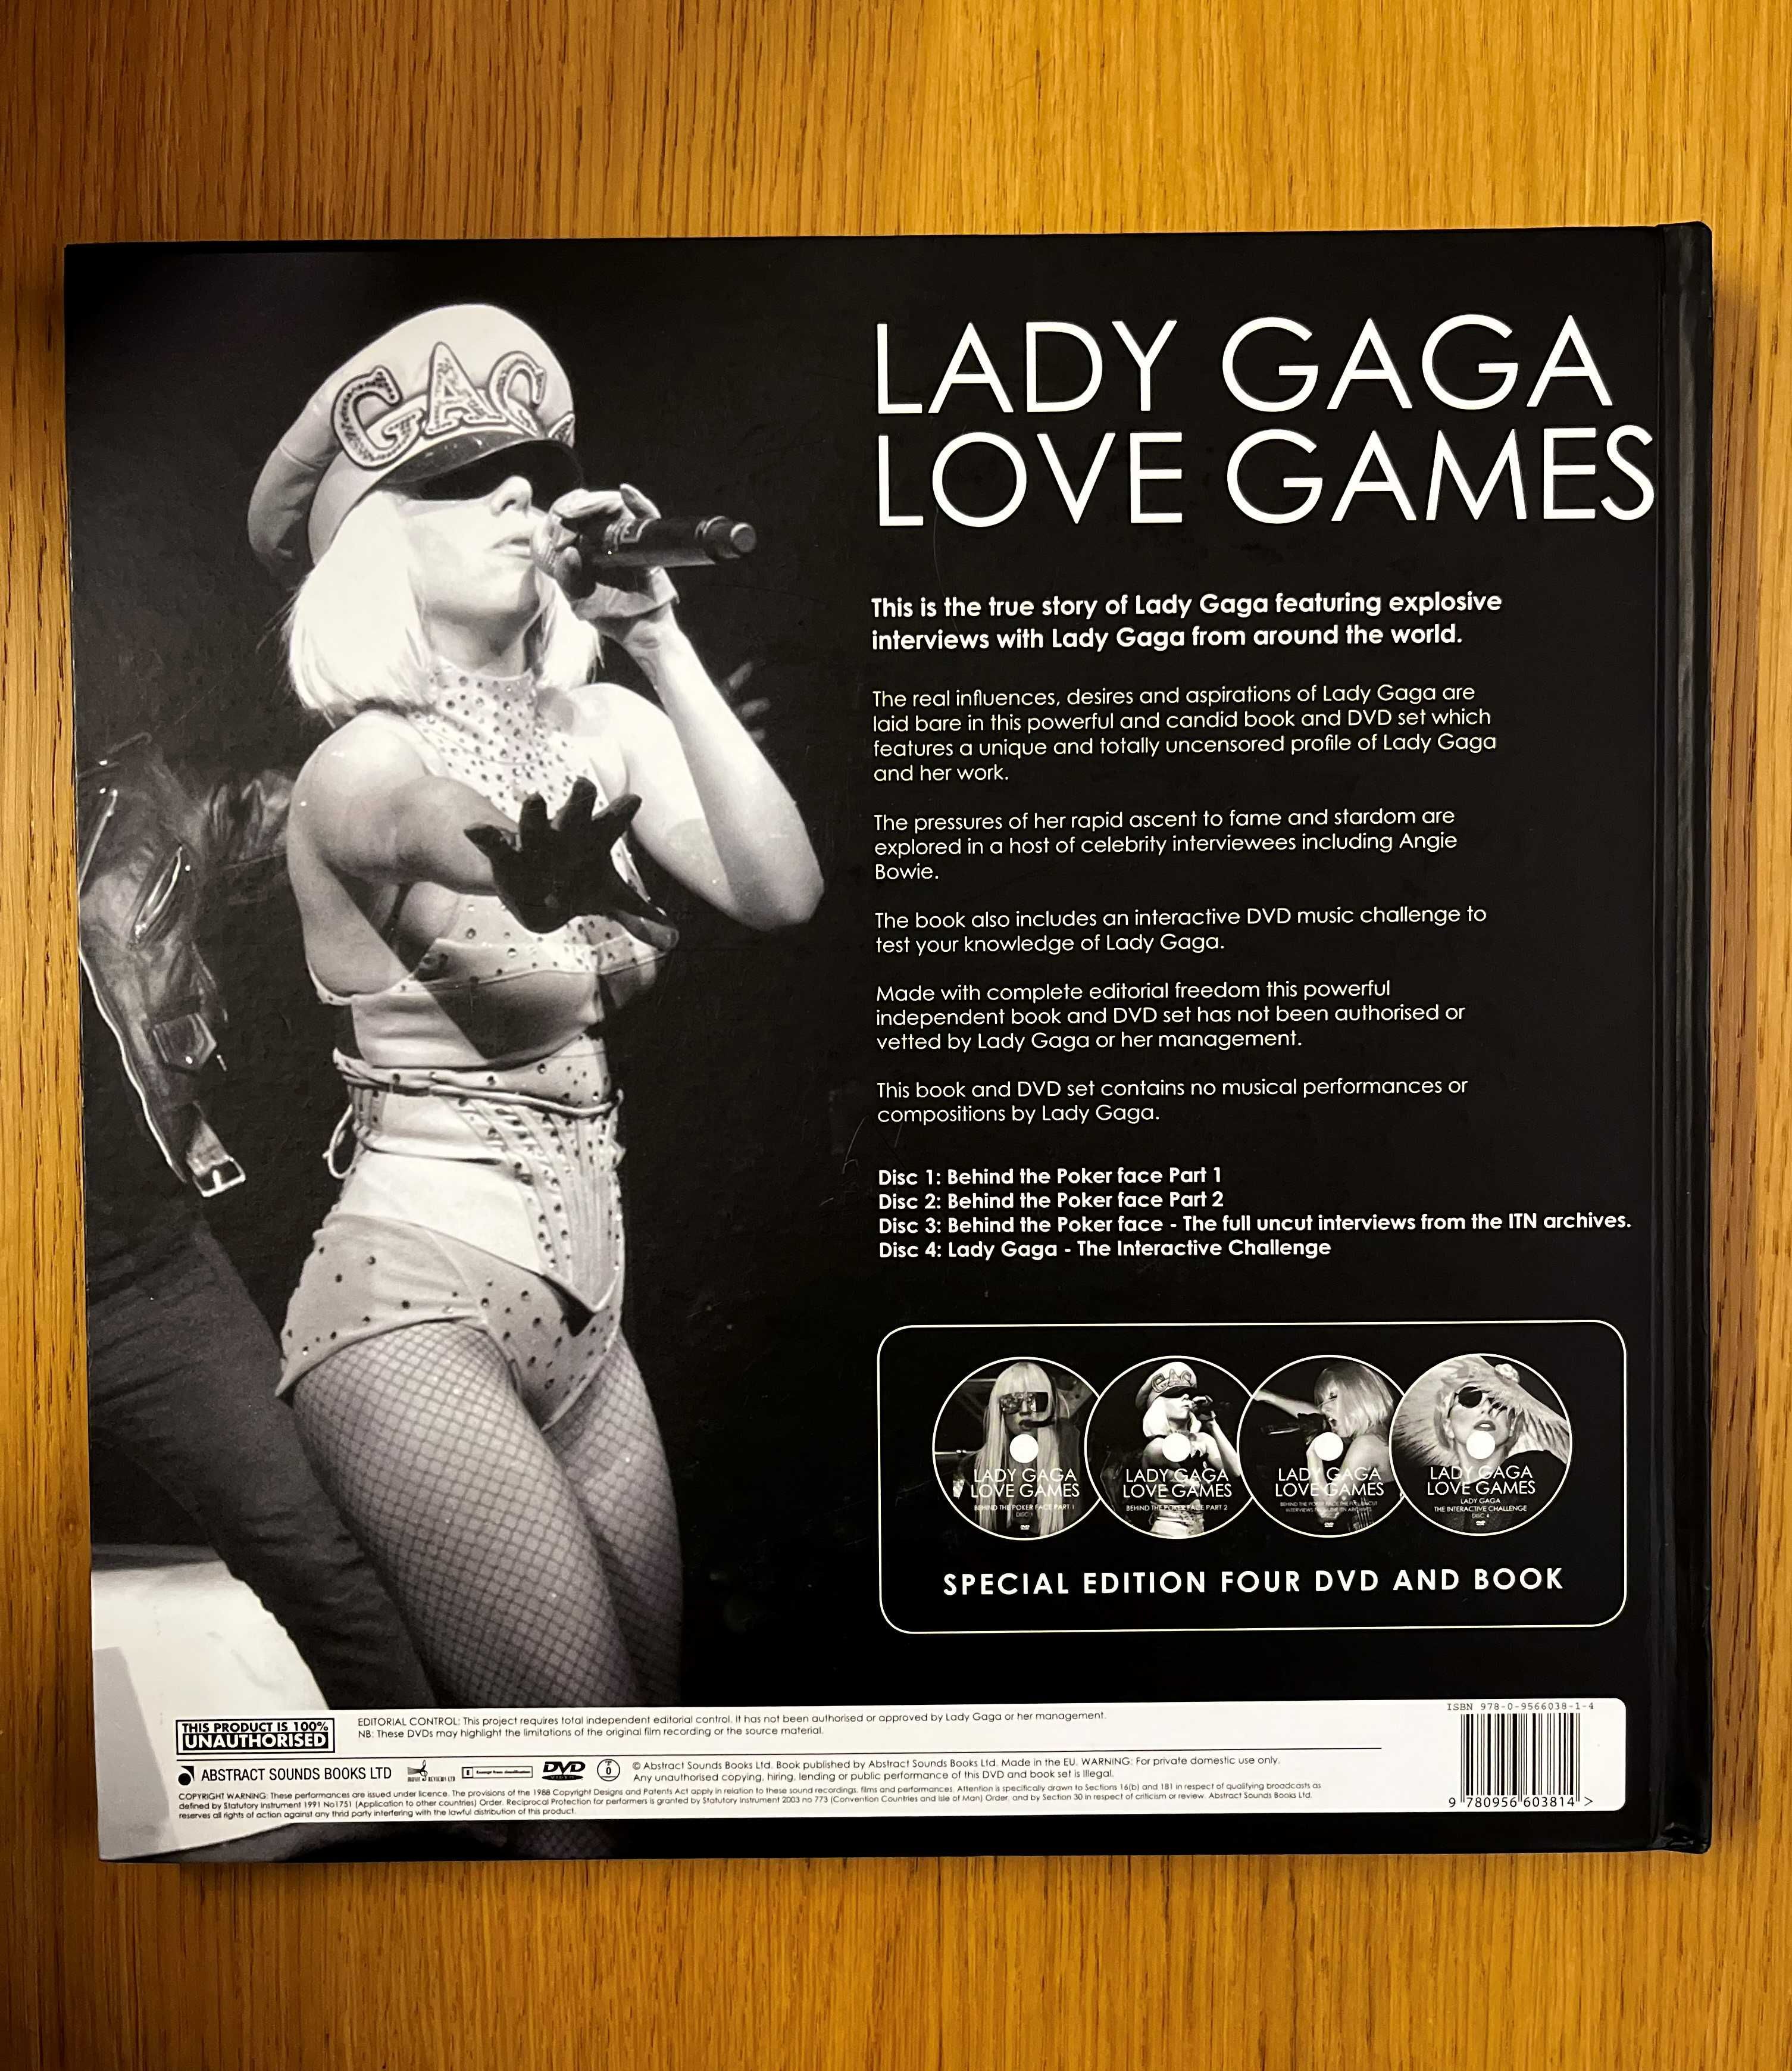 Livro “Lady Gaga - Love Games”